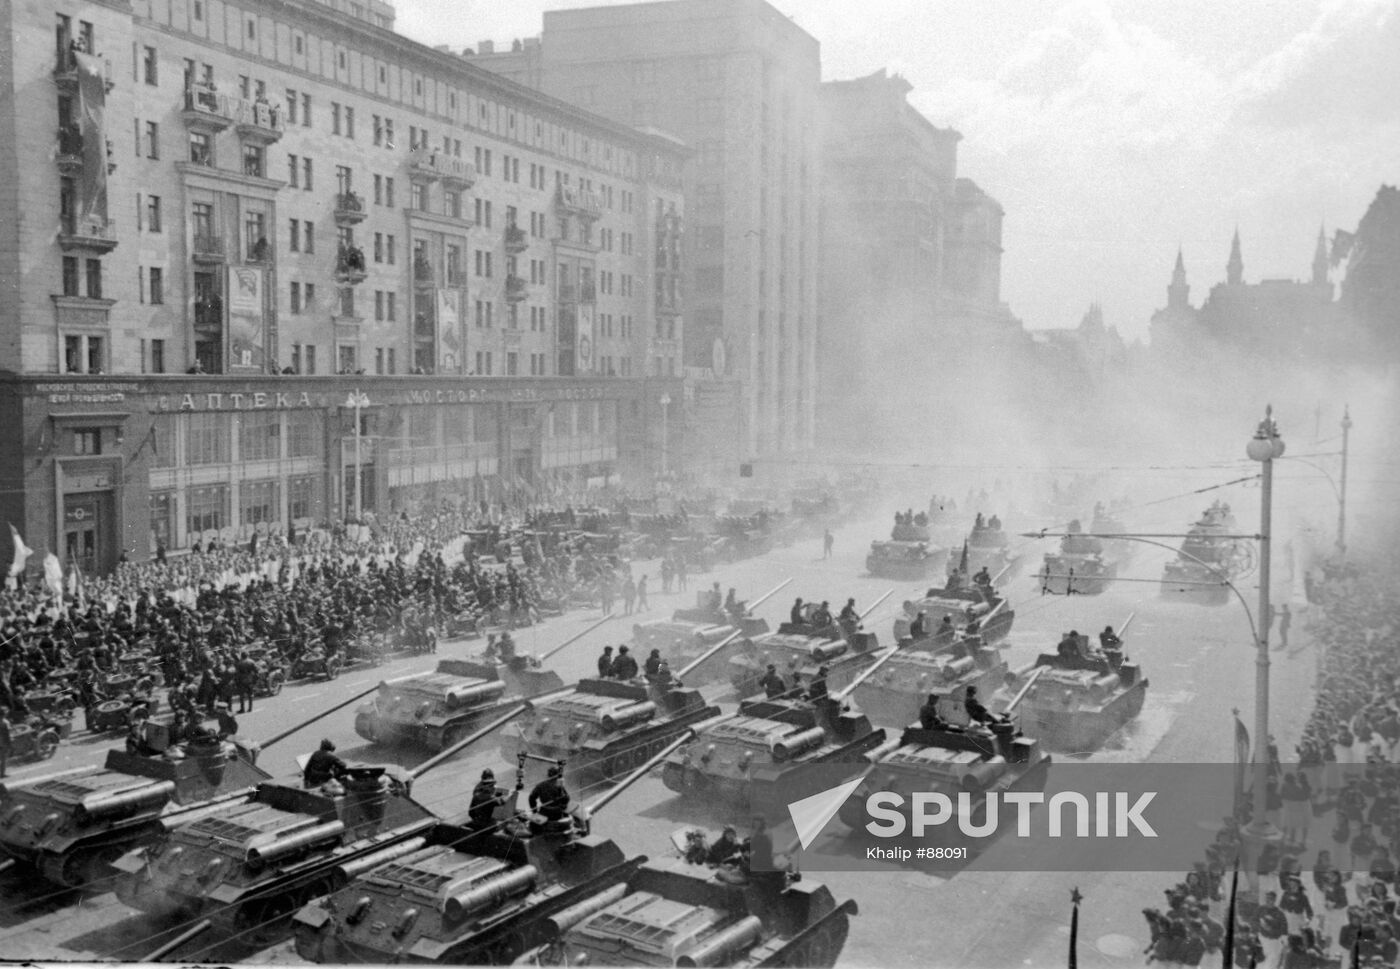 Parade v-day SP gun WWII